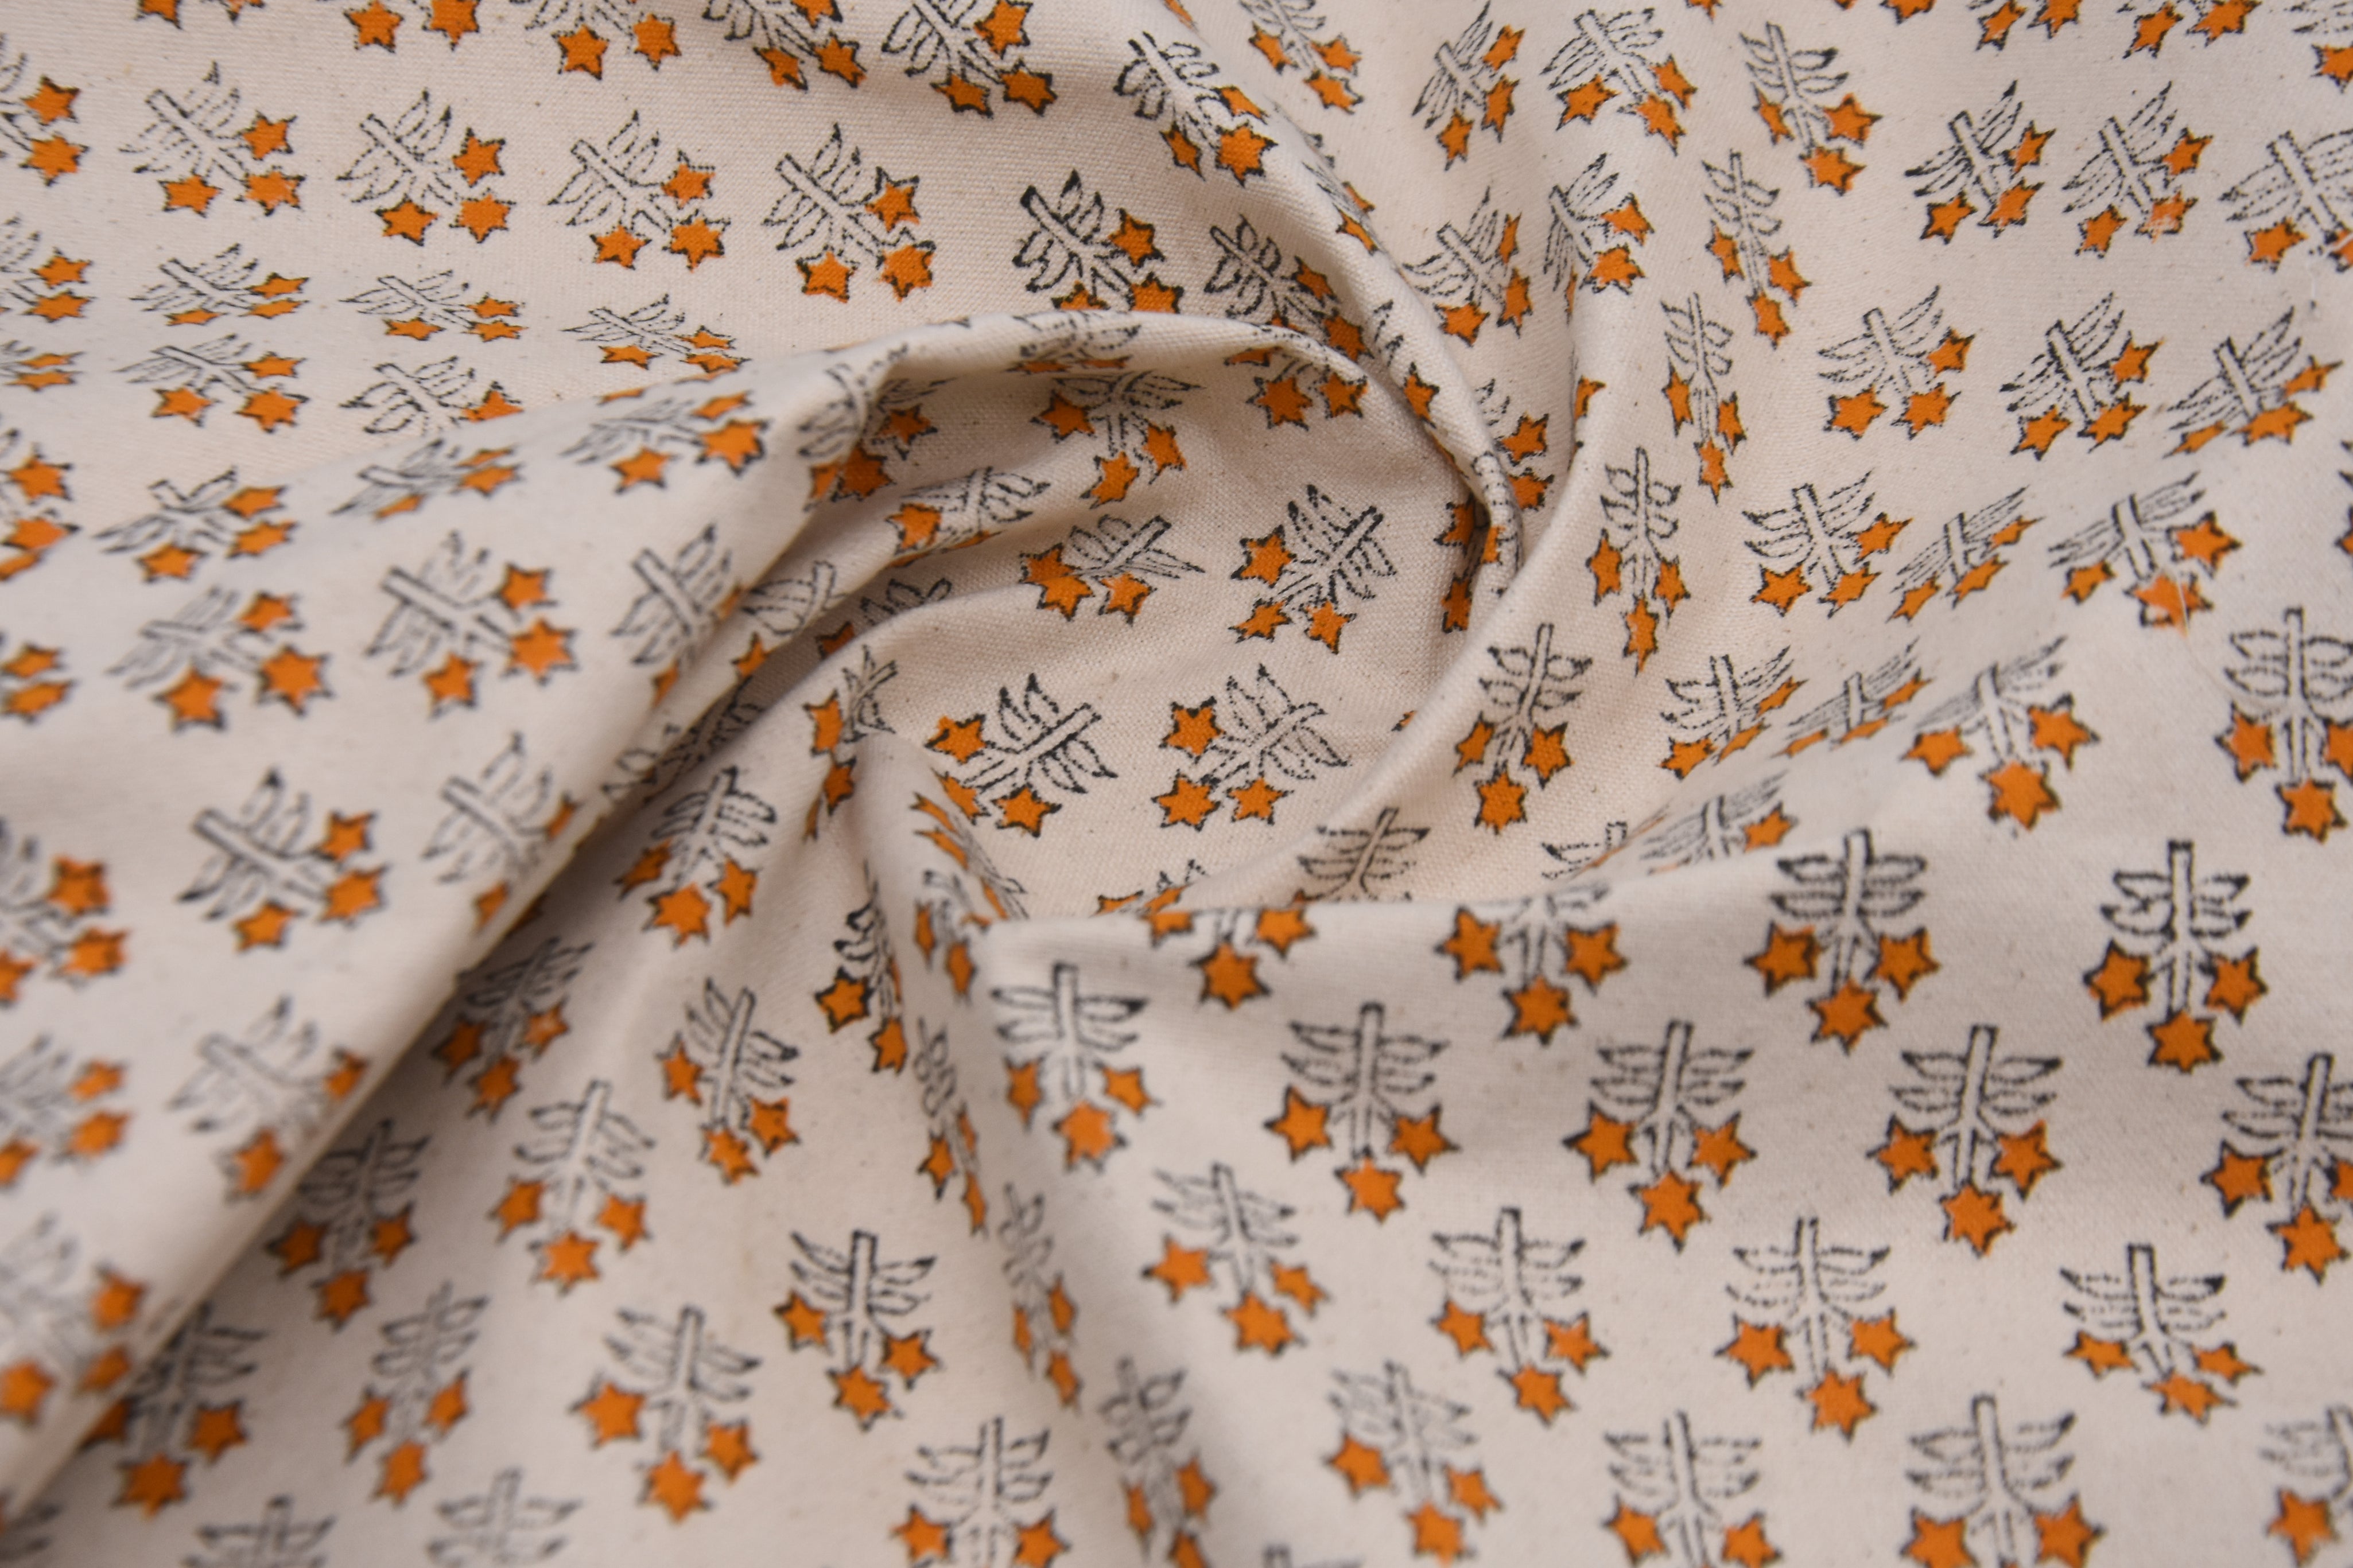 Duck canvas 50" wide, fabric for decorative pillows, hand block cushions, tablecloth, window curtains, floral print - KESARIYA